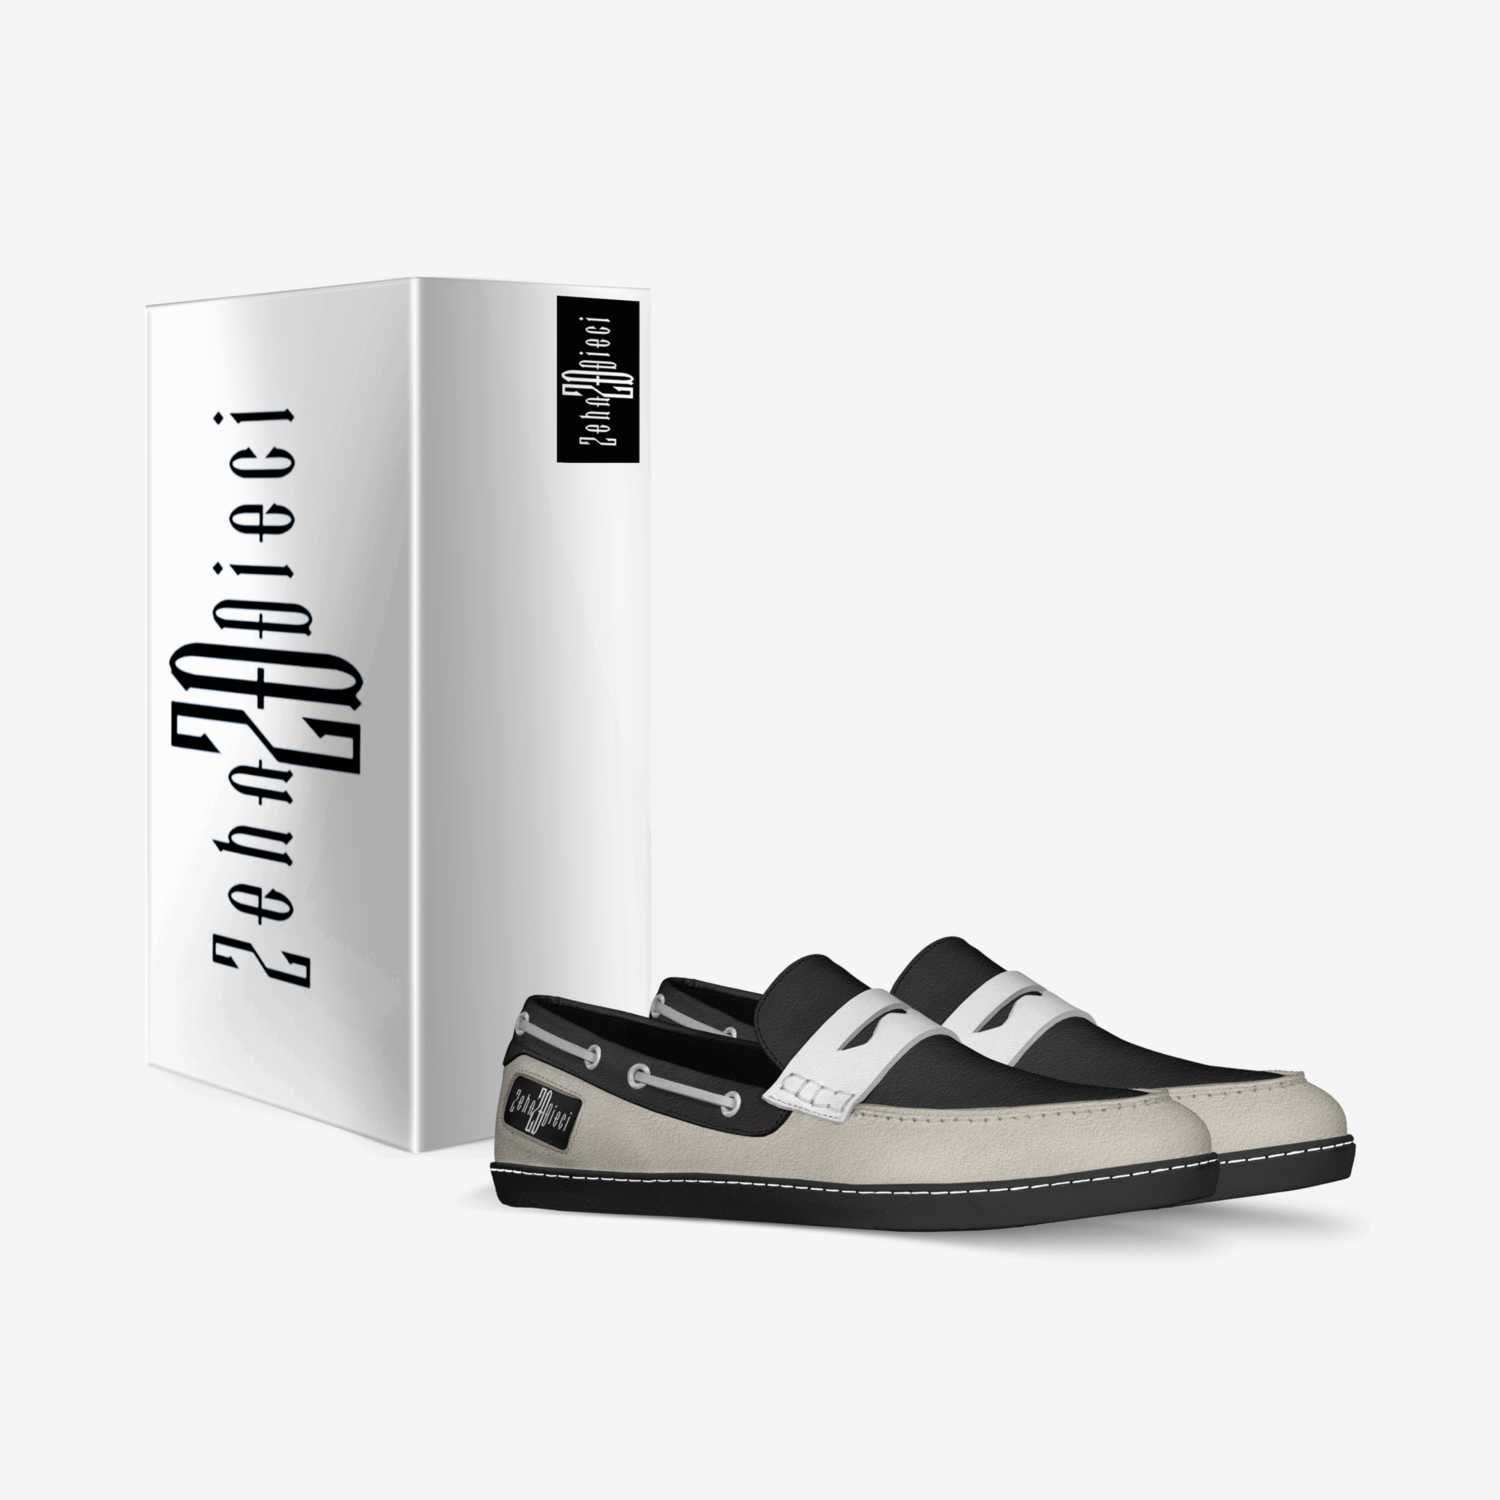 Kifahari custom made in Italy shoes by Zehn Dieci | Box view